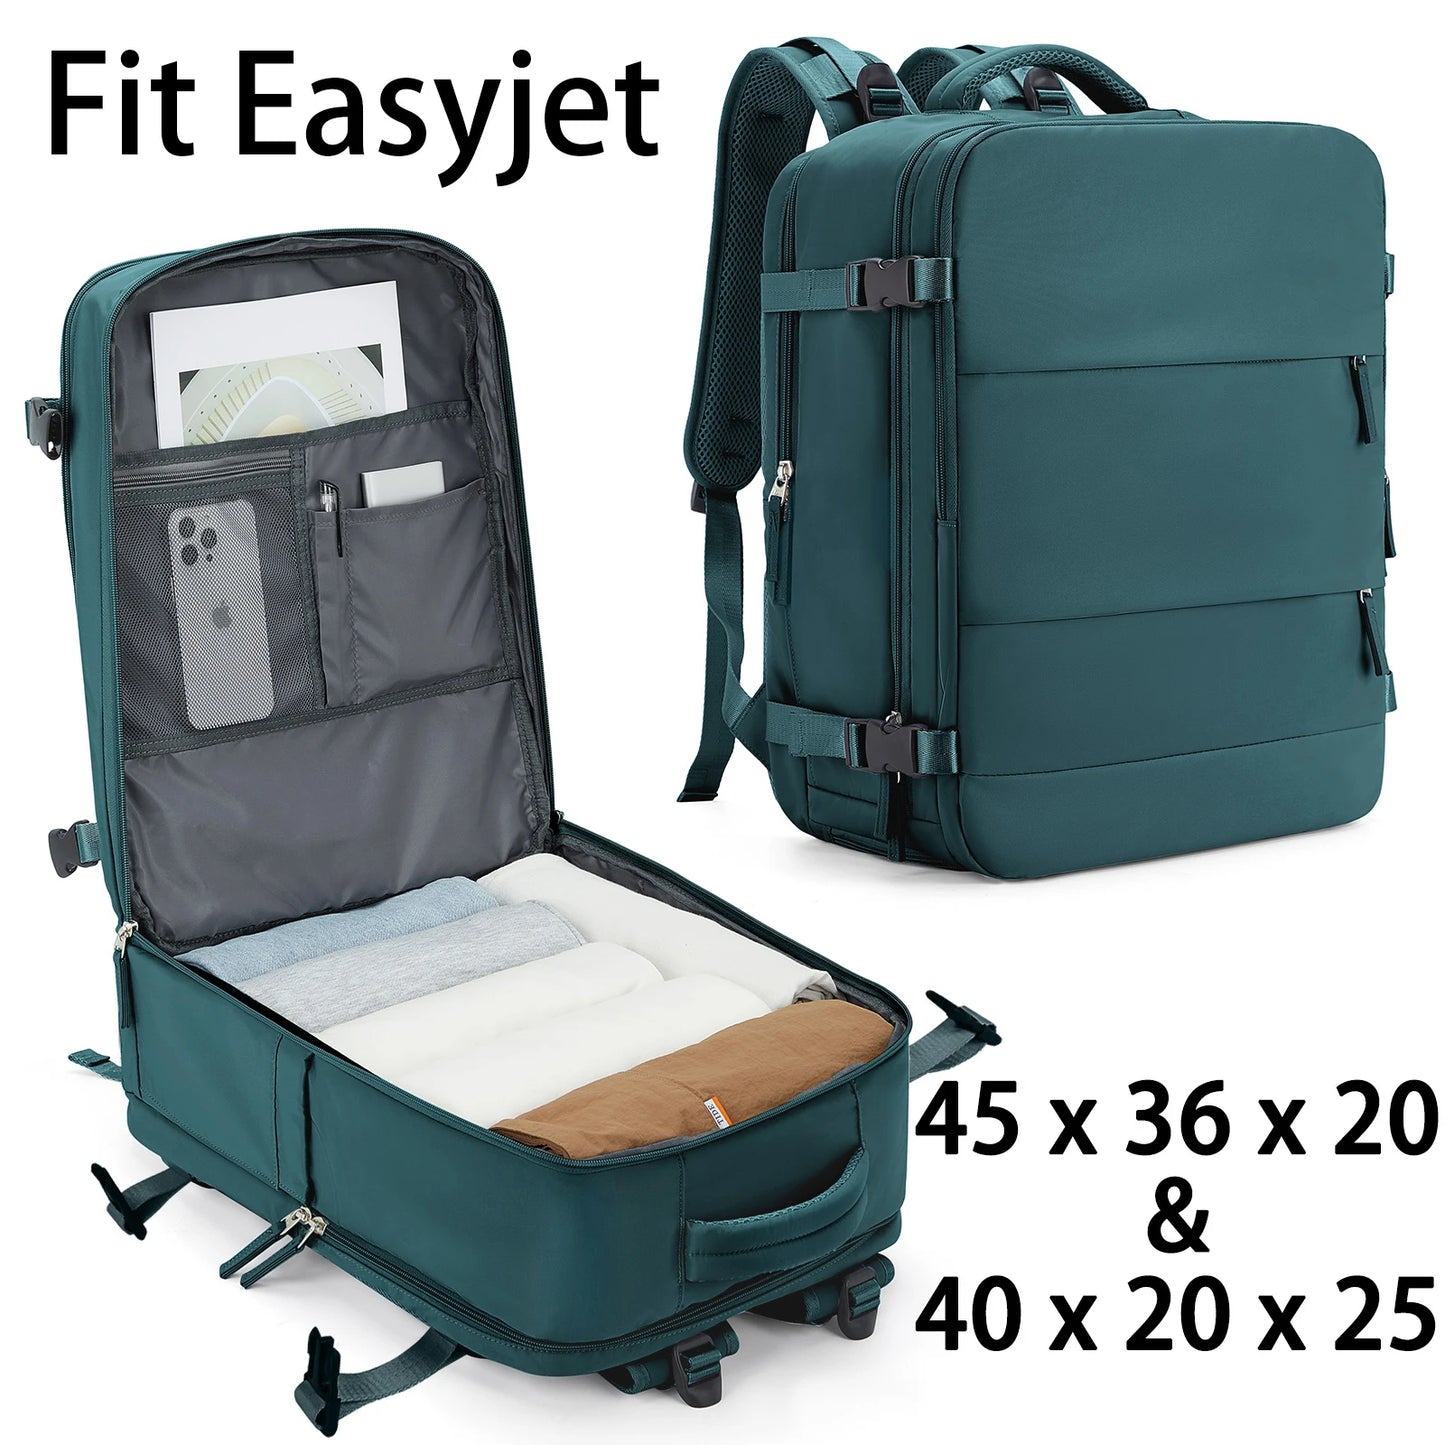 Flight Friendly Travel Backpack (2 Sizes)